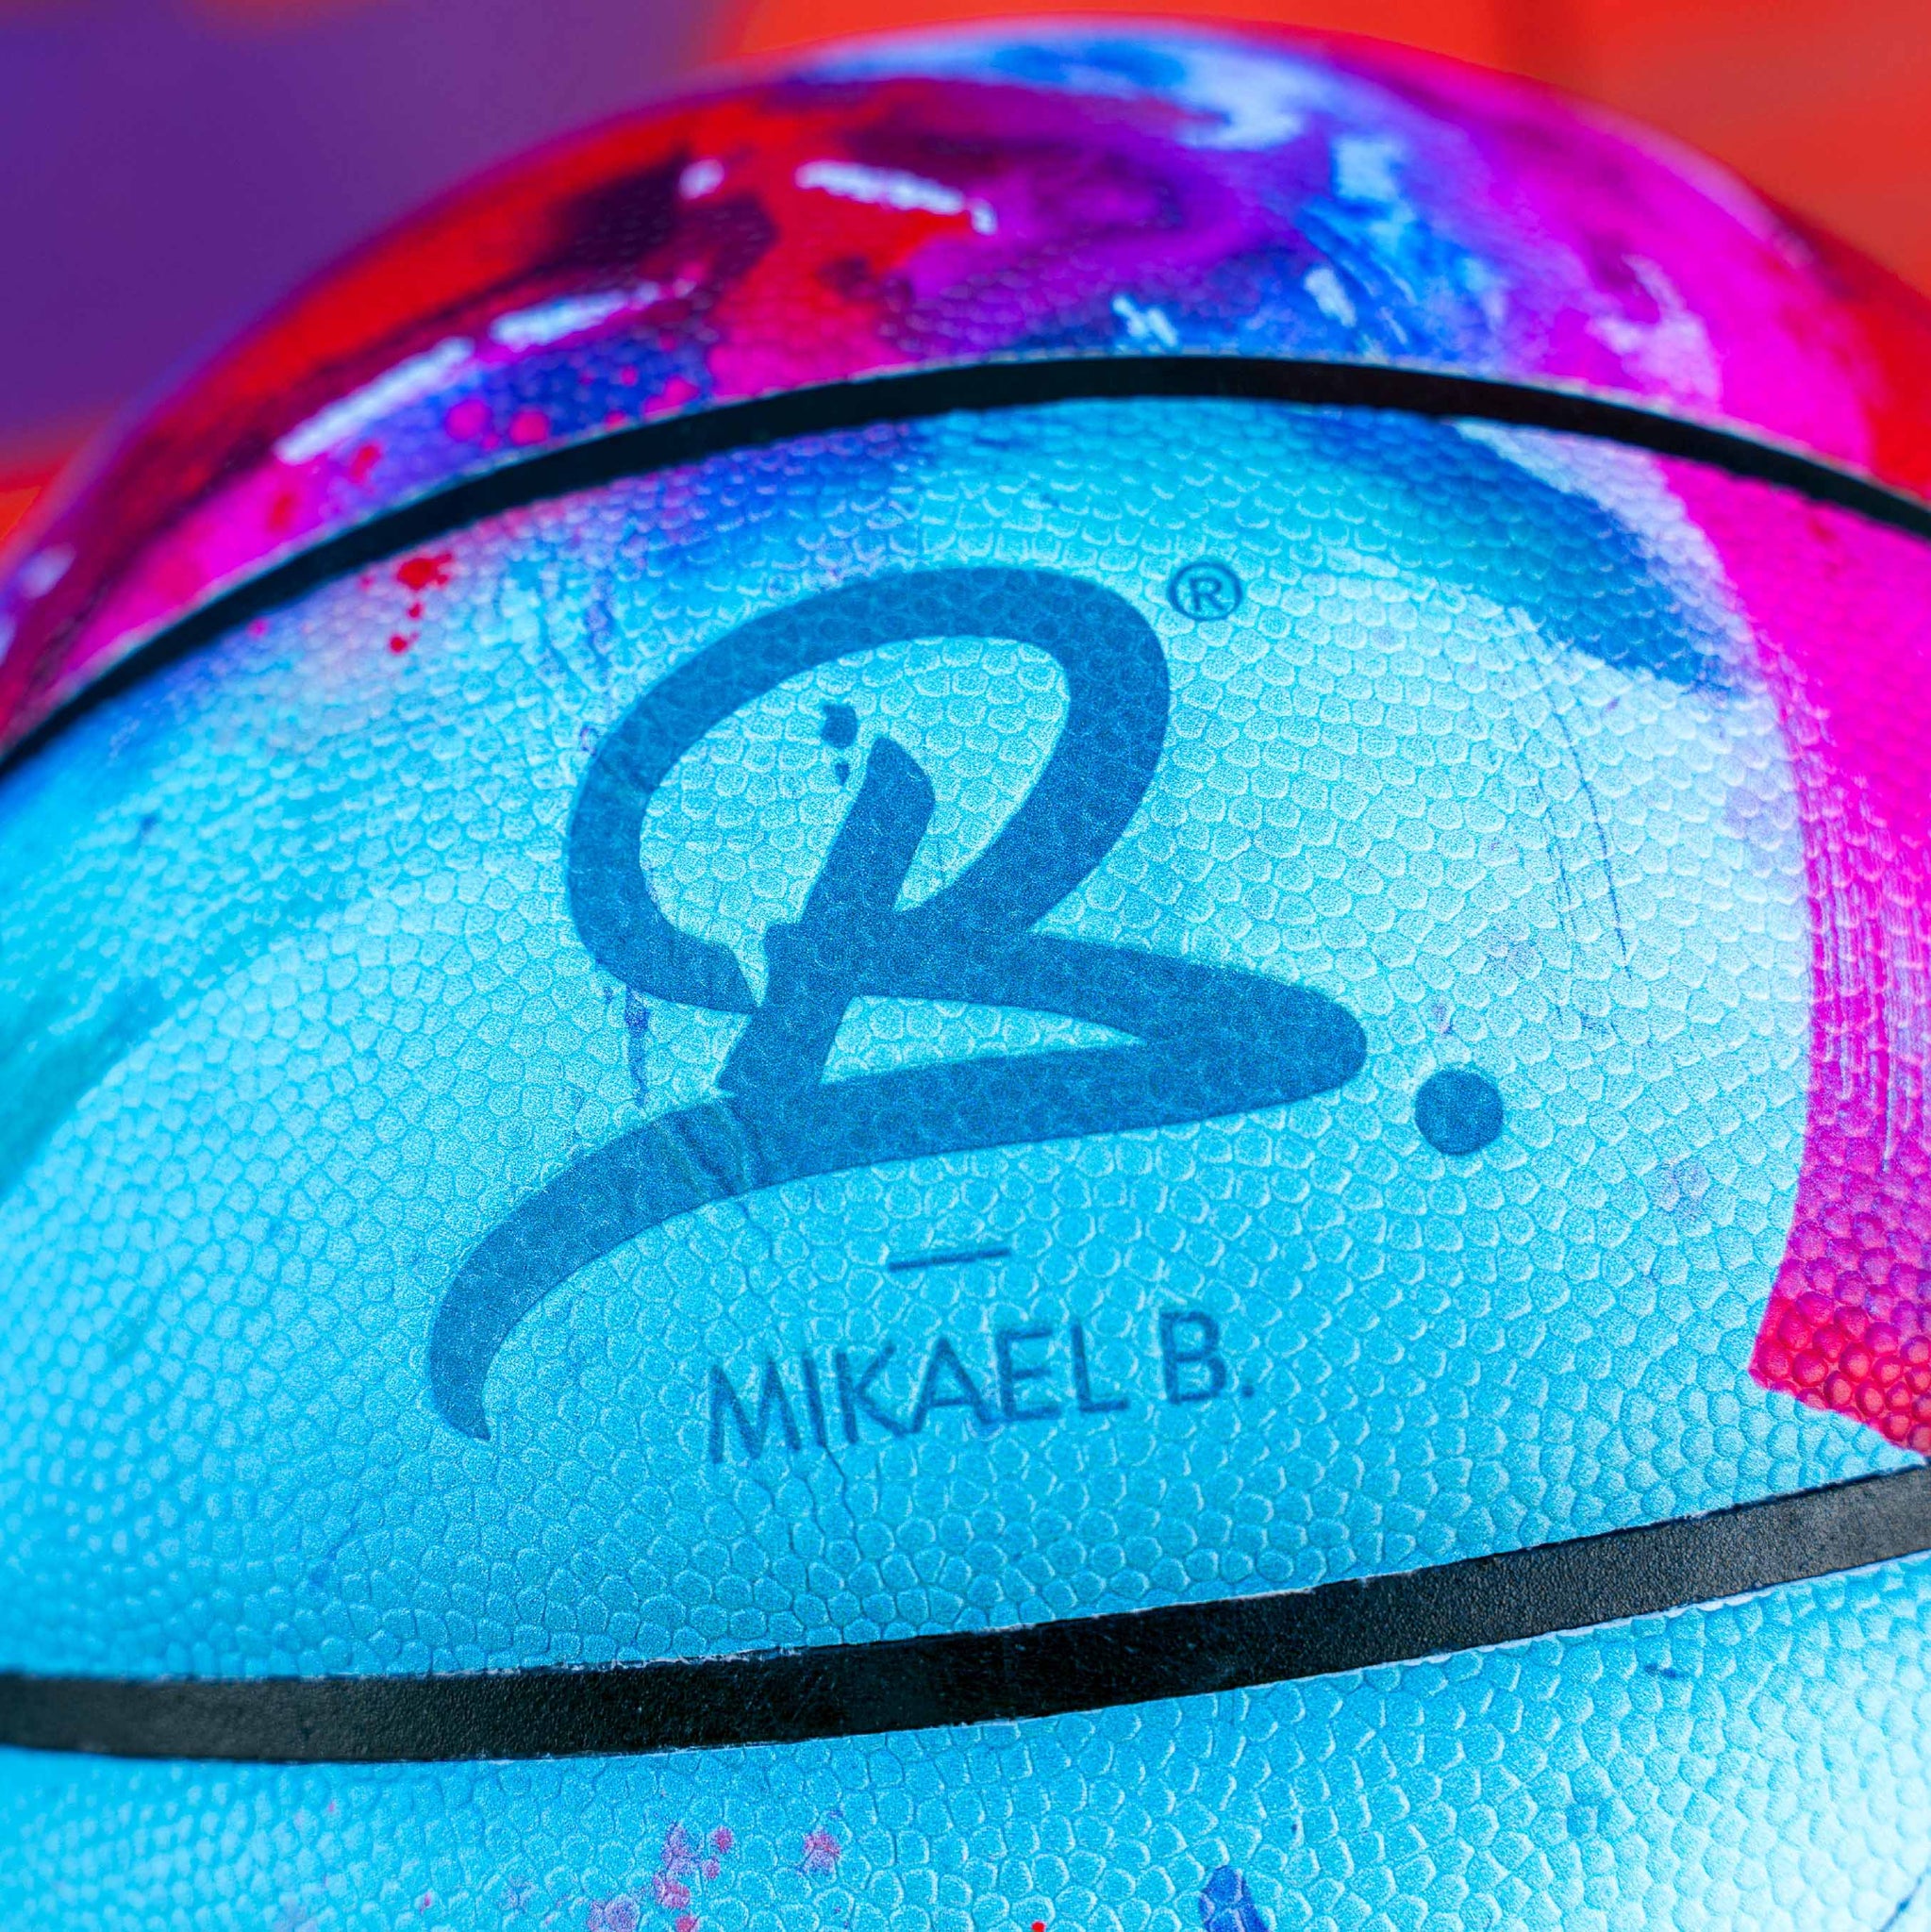 Mikael B. MOTION FLAIR Limited Edition Basketball